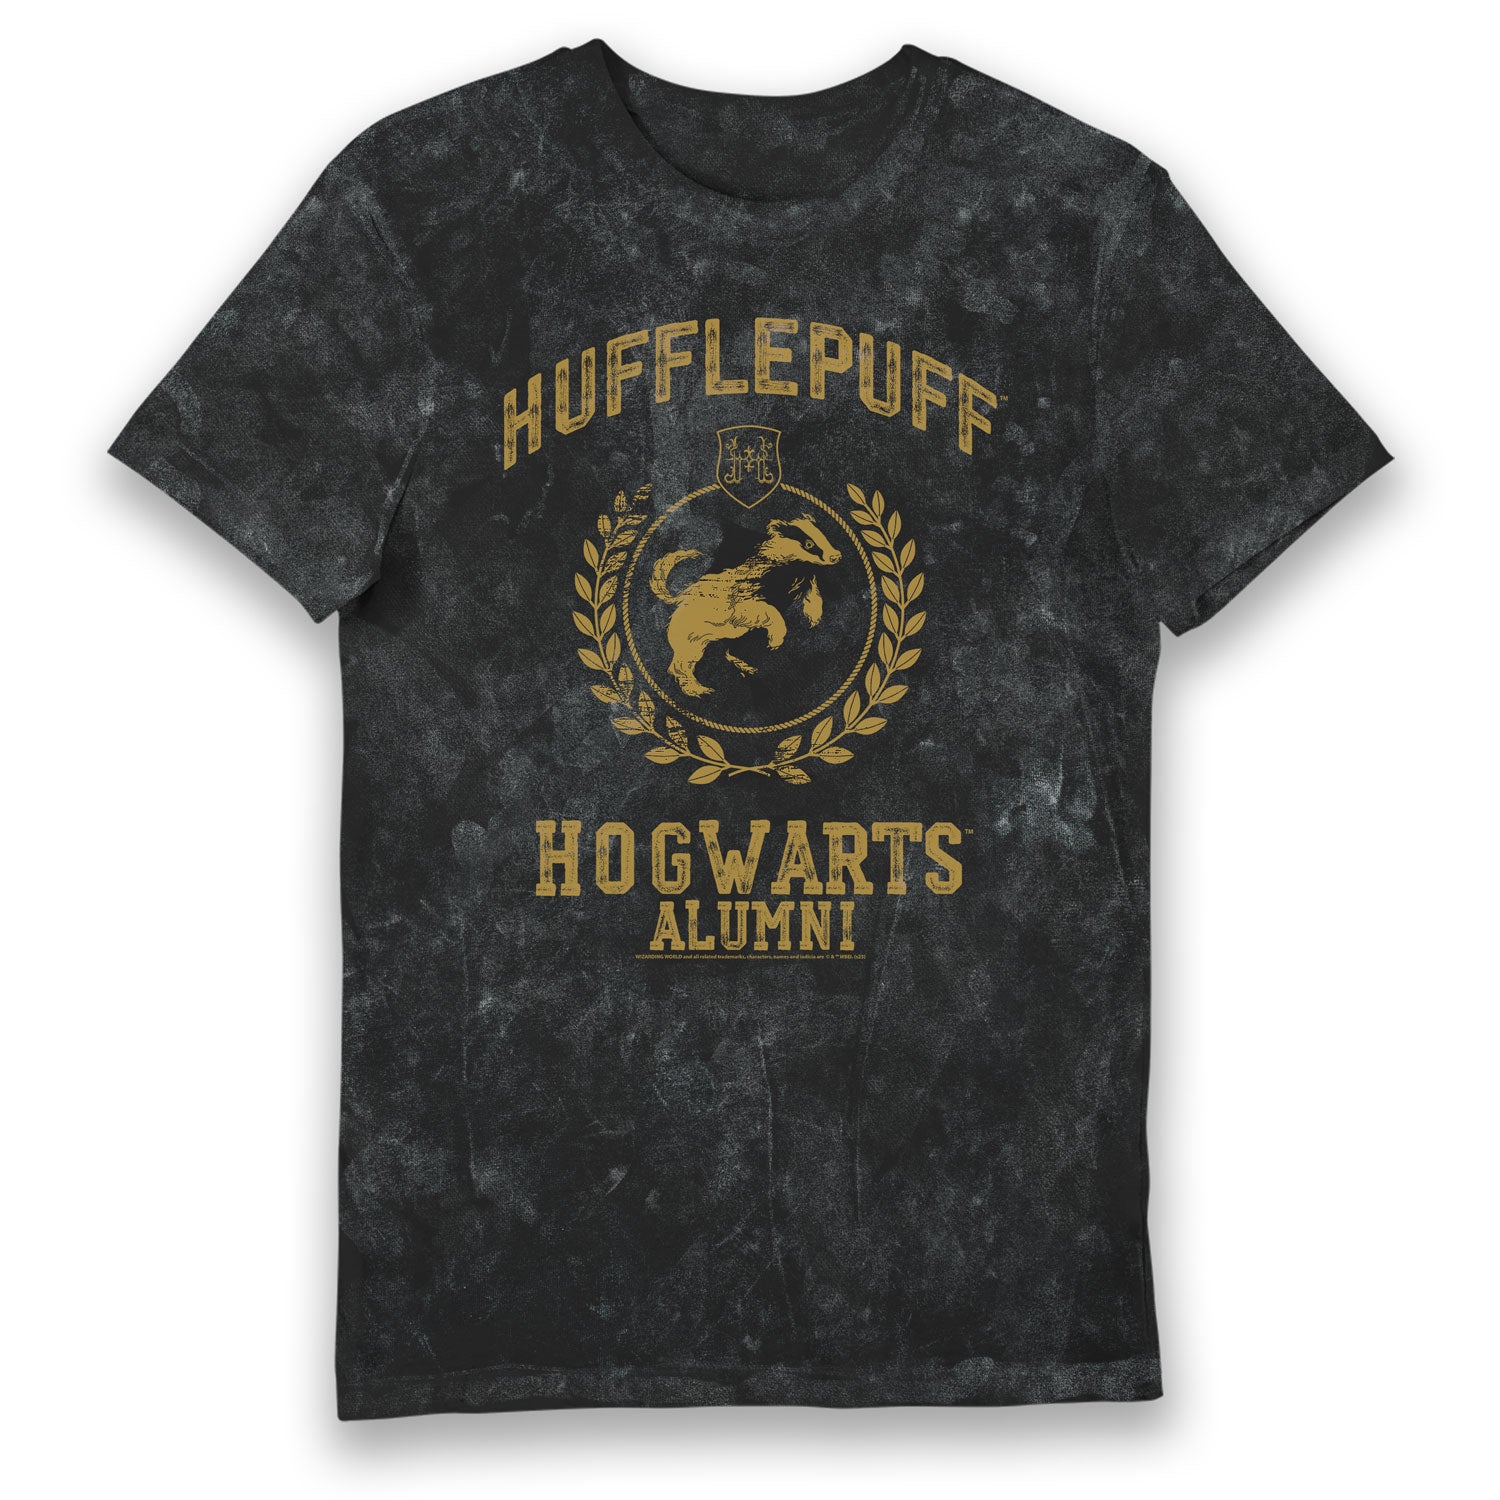 Harry Potter Hufflepuff Hogwarts Alumni Vintage Style Adults T-Shirt